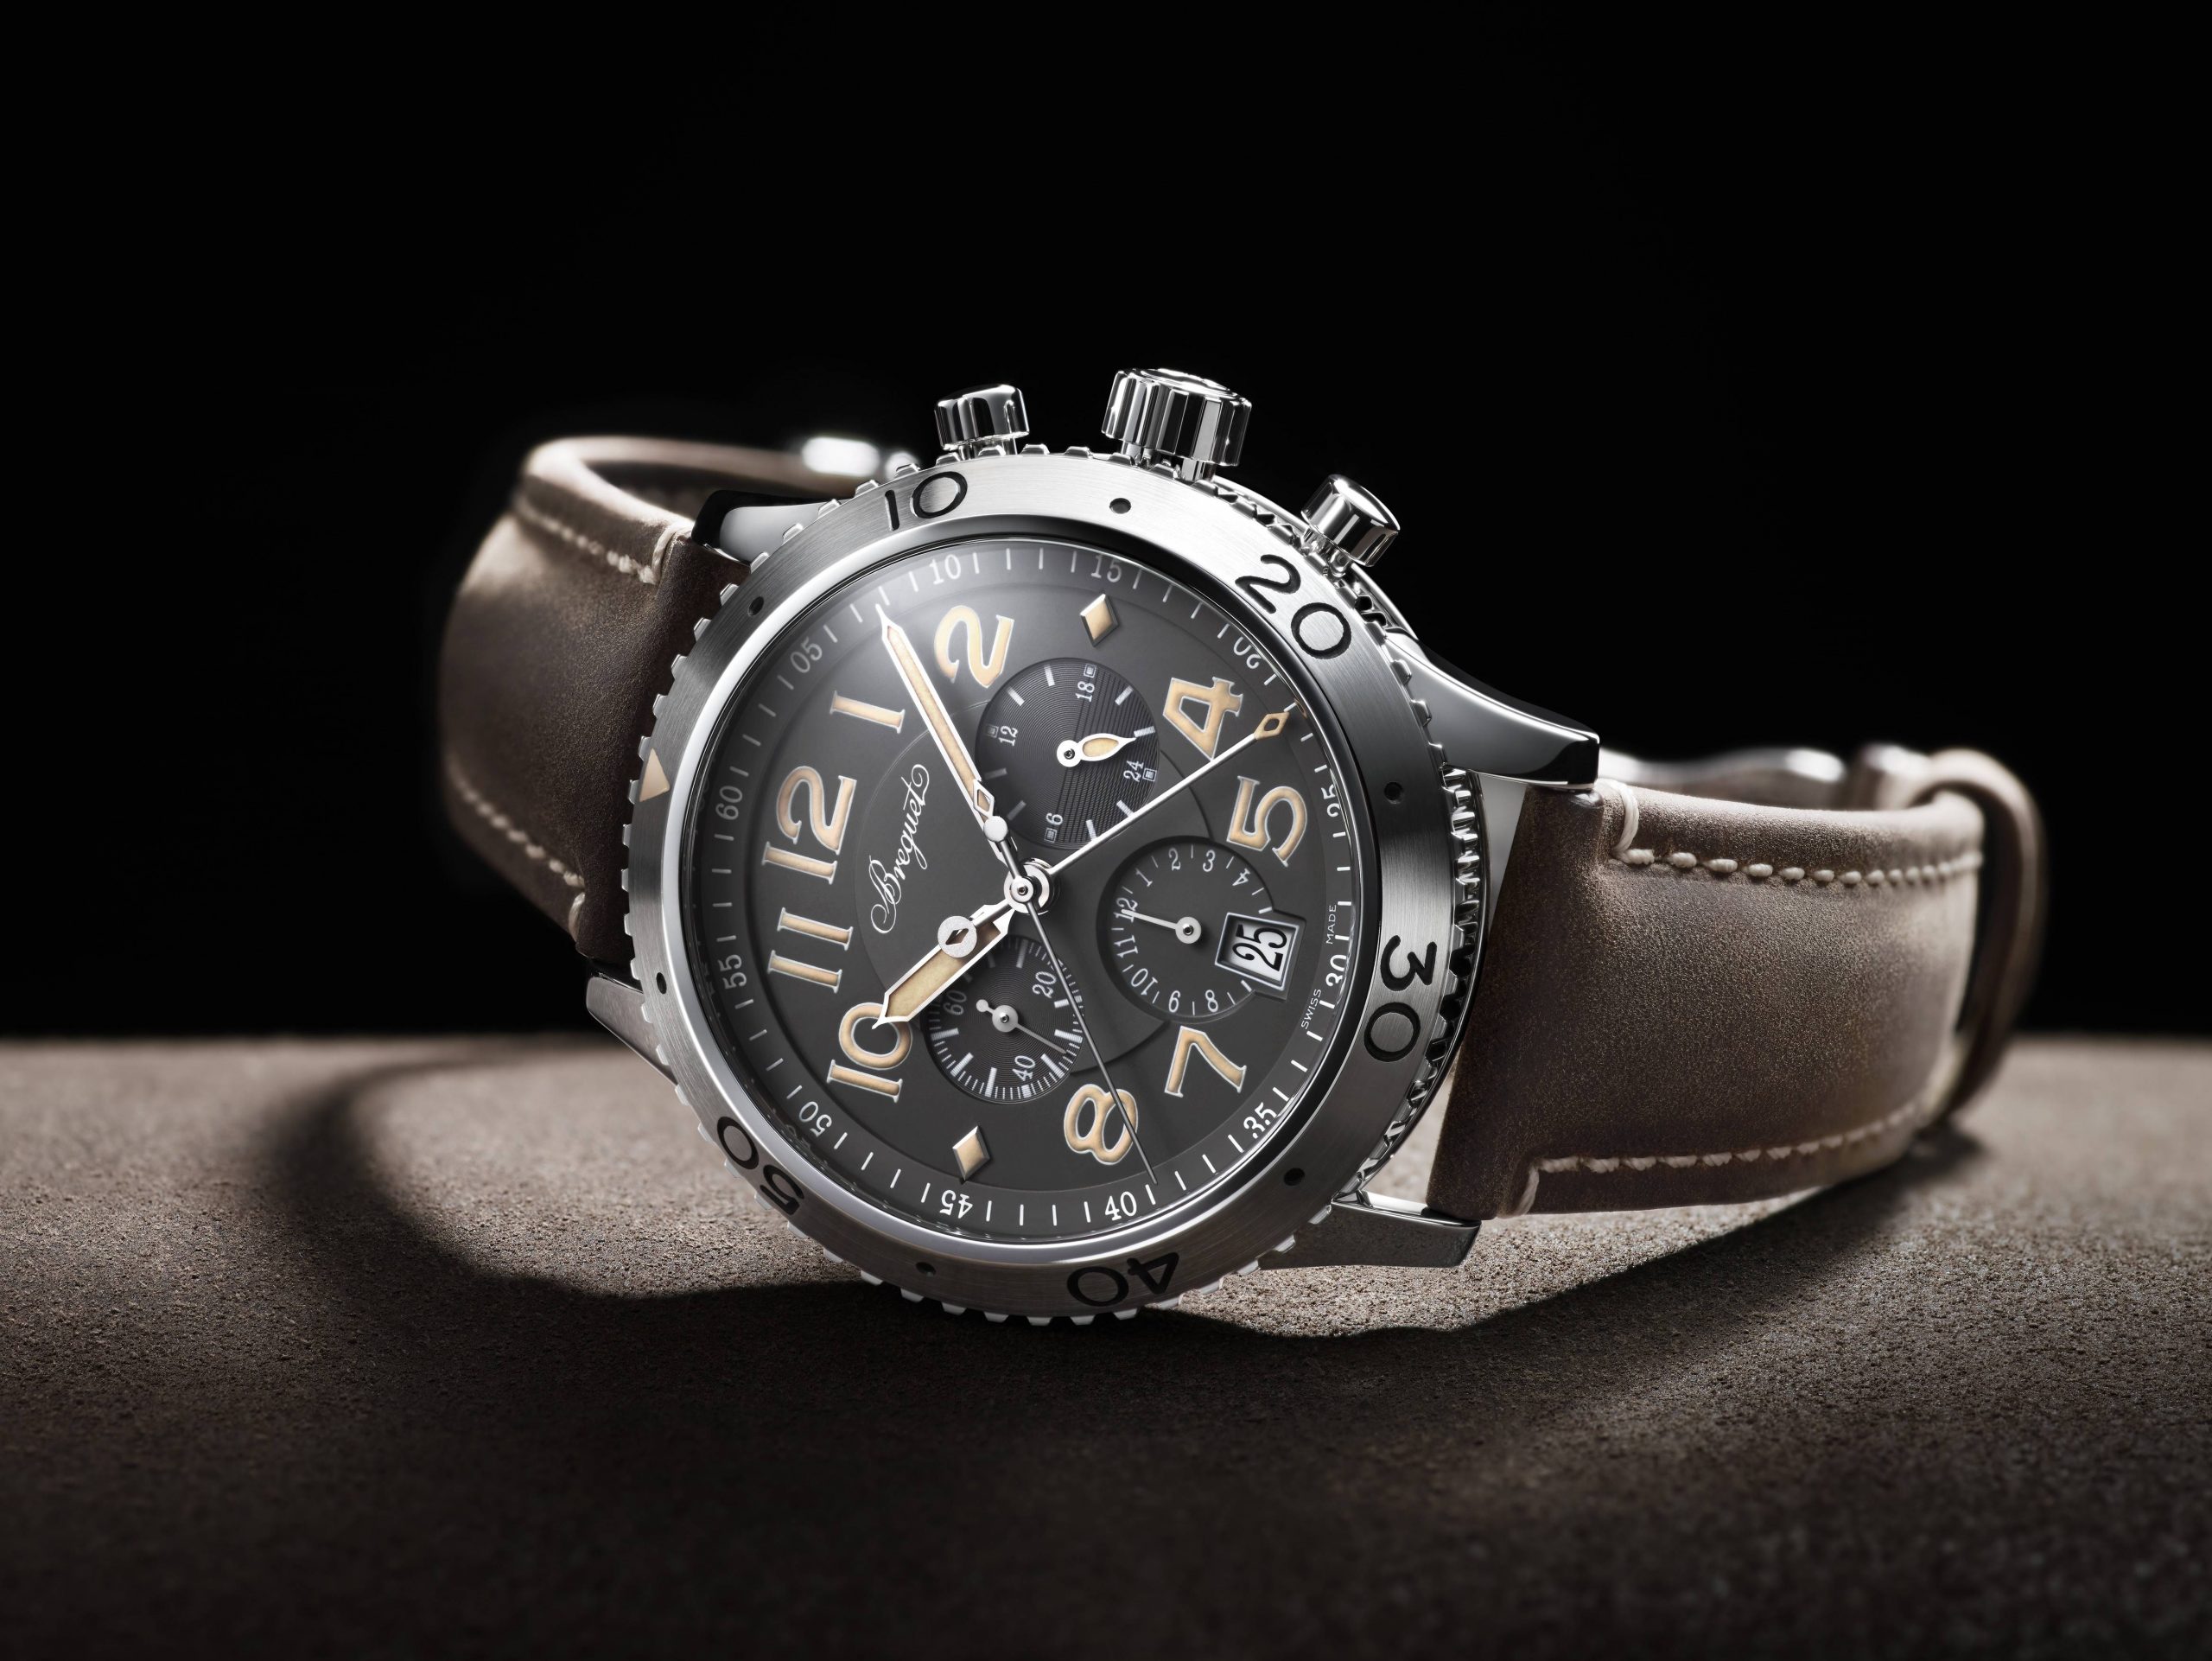 Only Watch 2015: Breguet Unveils Platinum Type XXI Chronograph